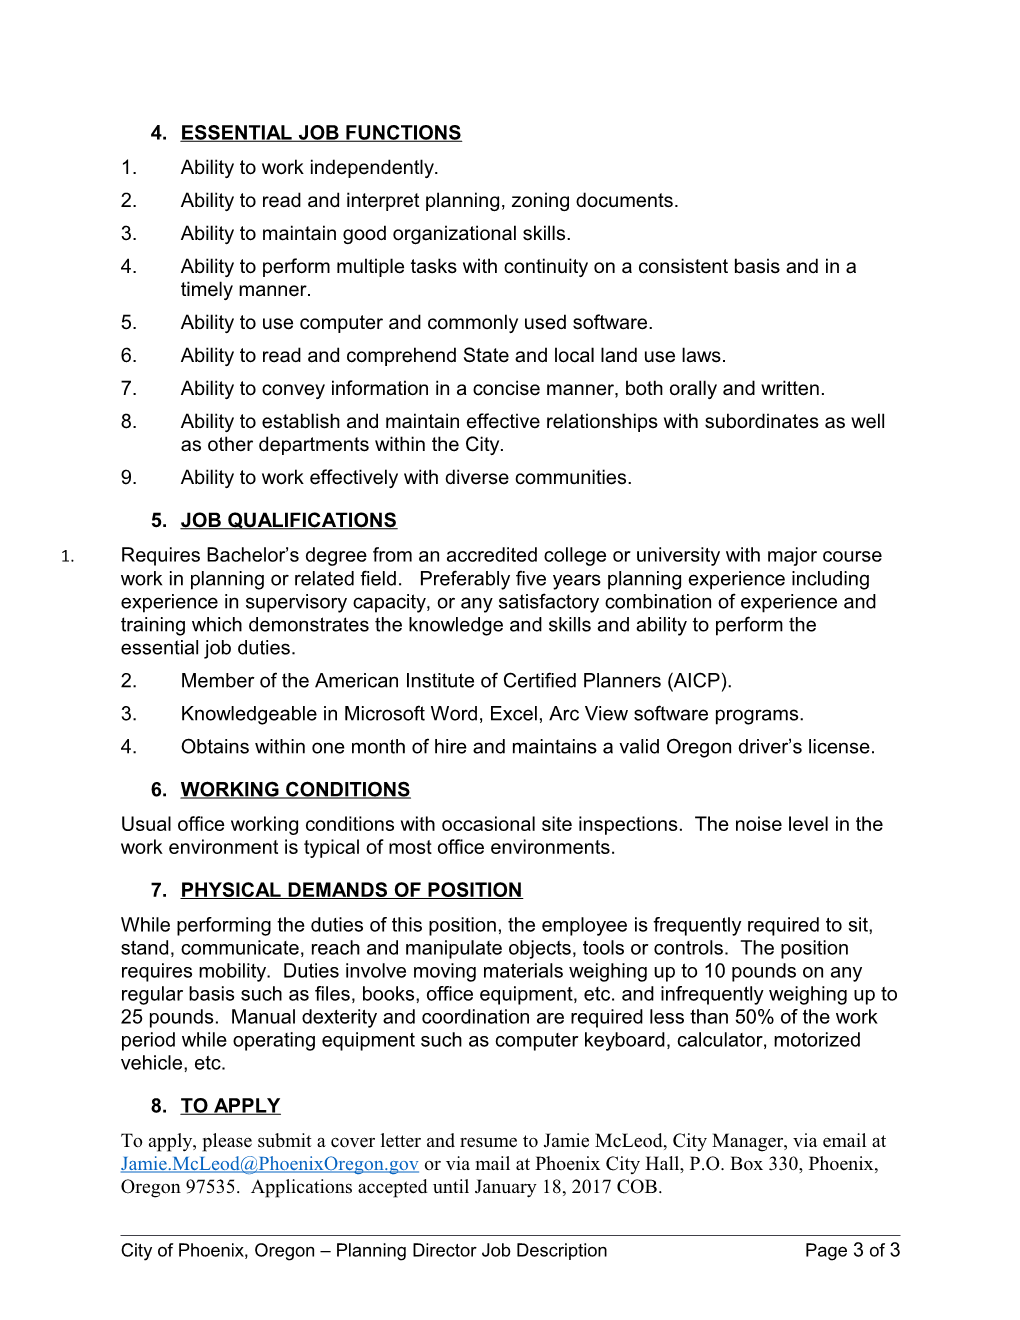 City of Phoenix, Oregon Planning Director Job Description Page 1 of 3